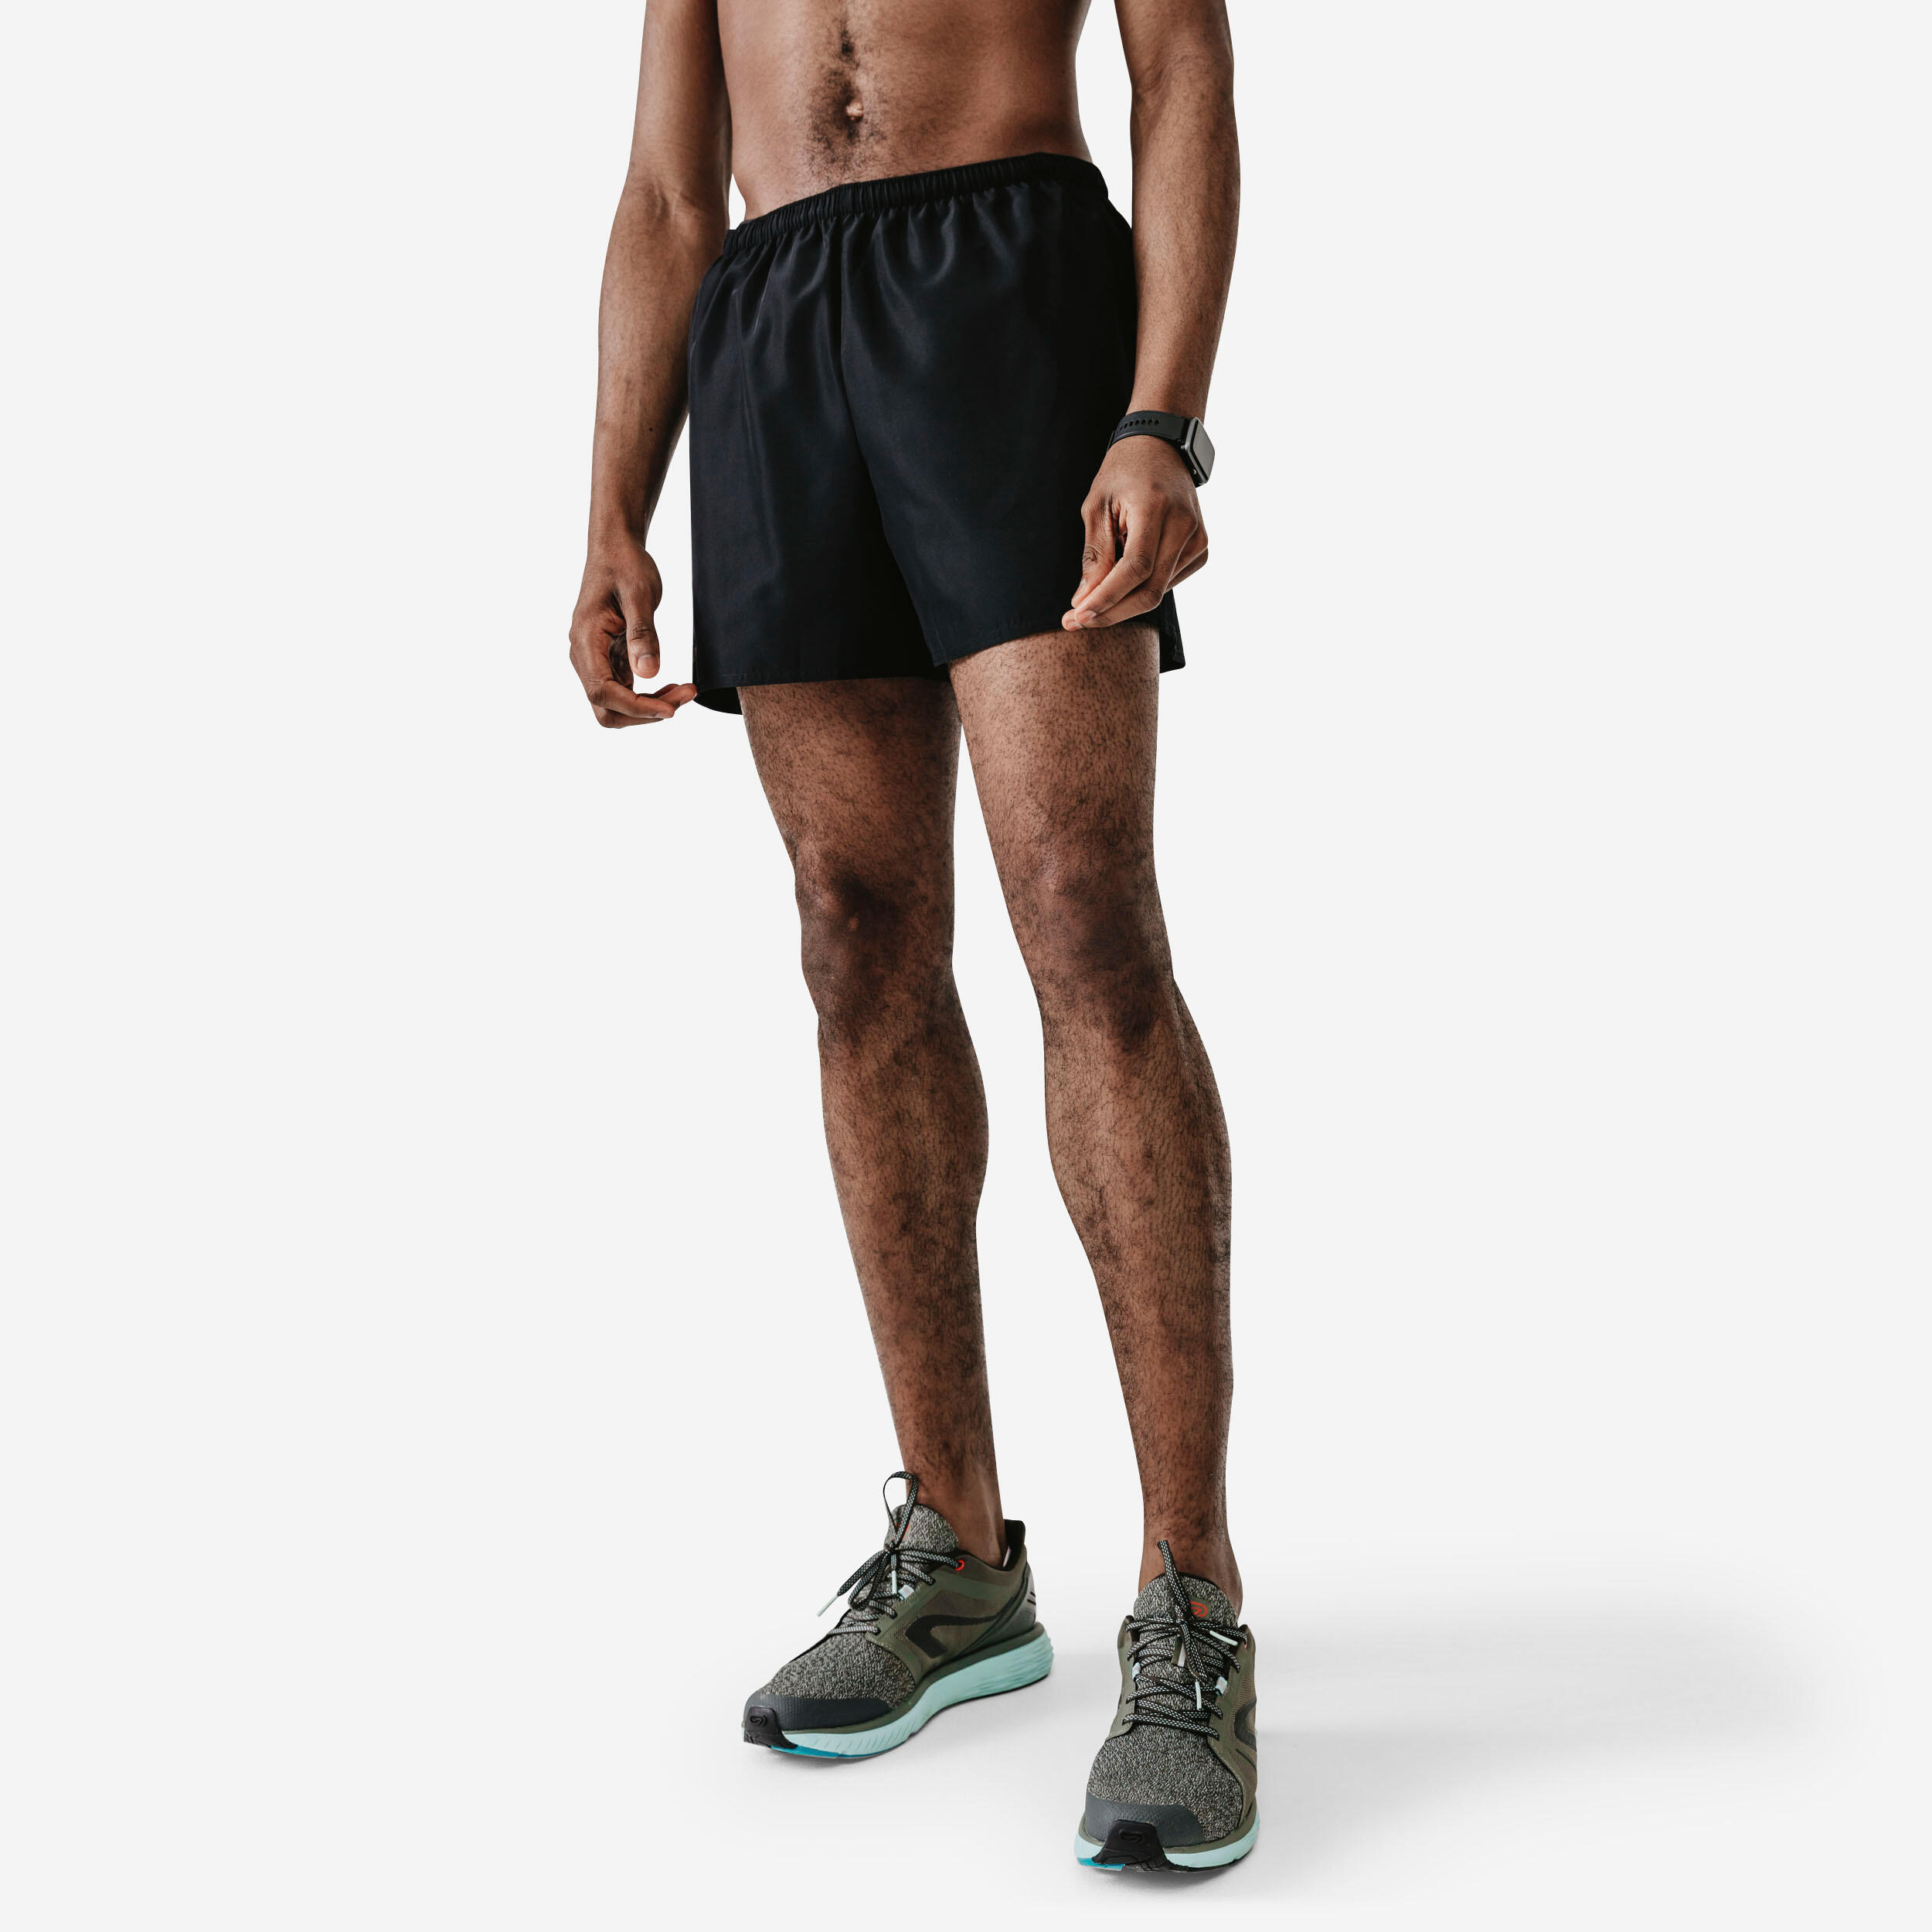 KALENJI Men's Running Breathable Shorts Dry - black